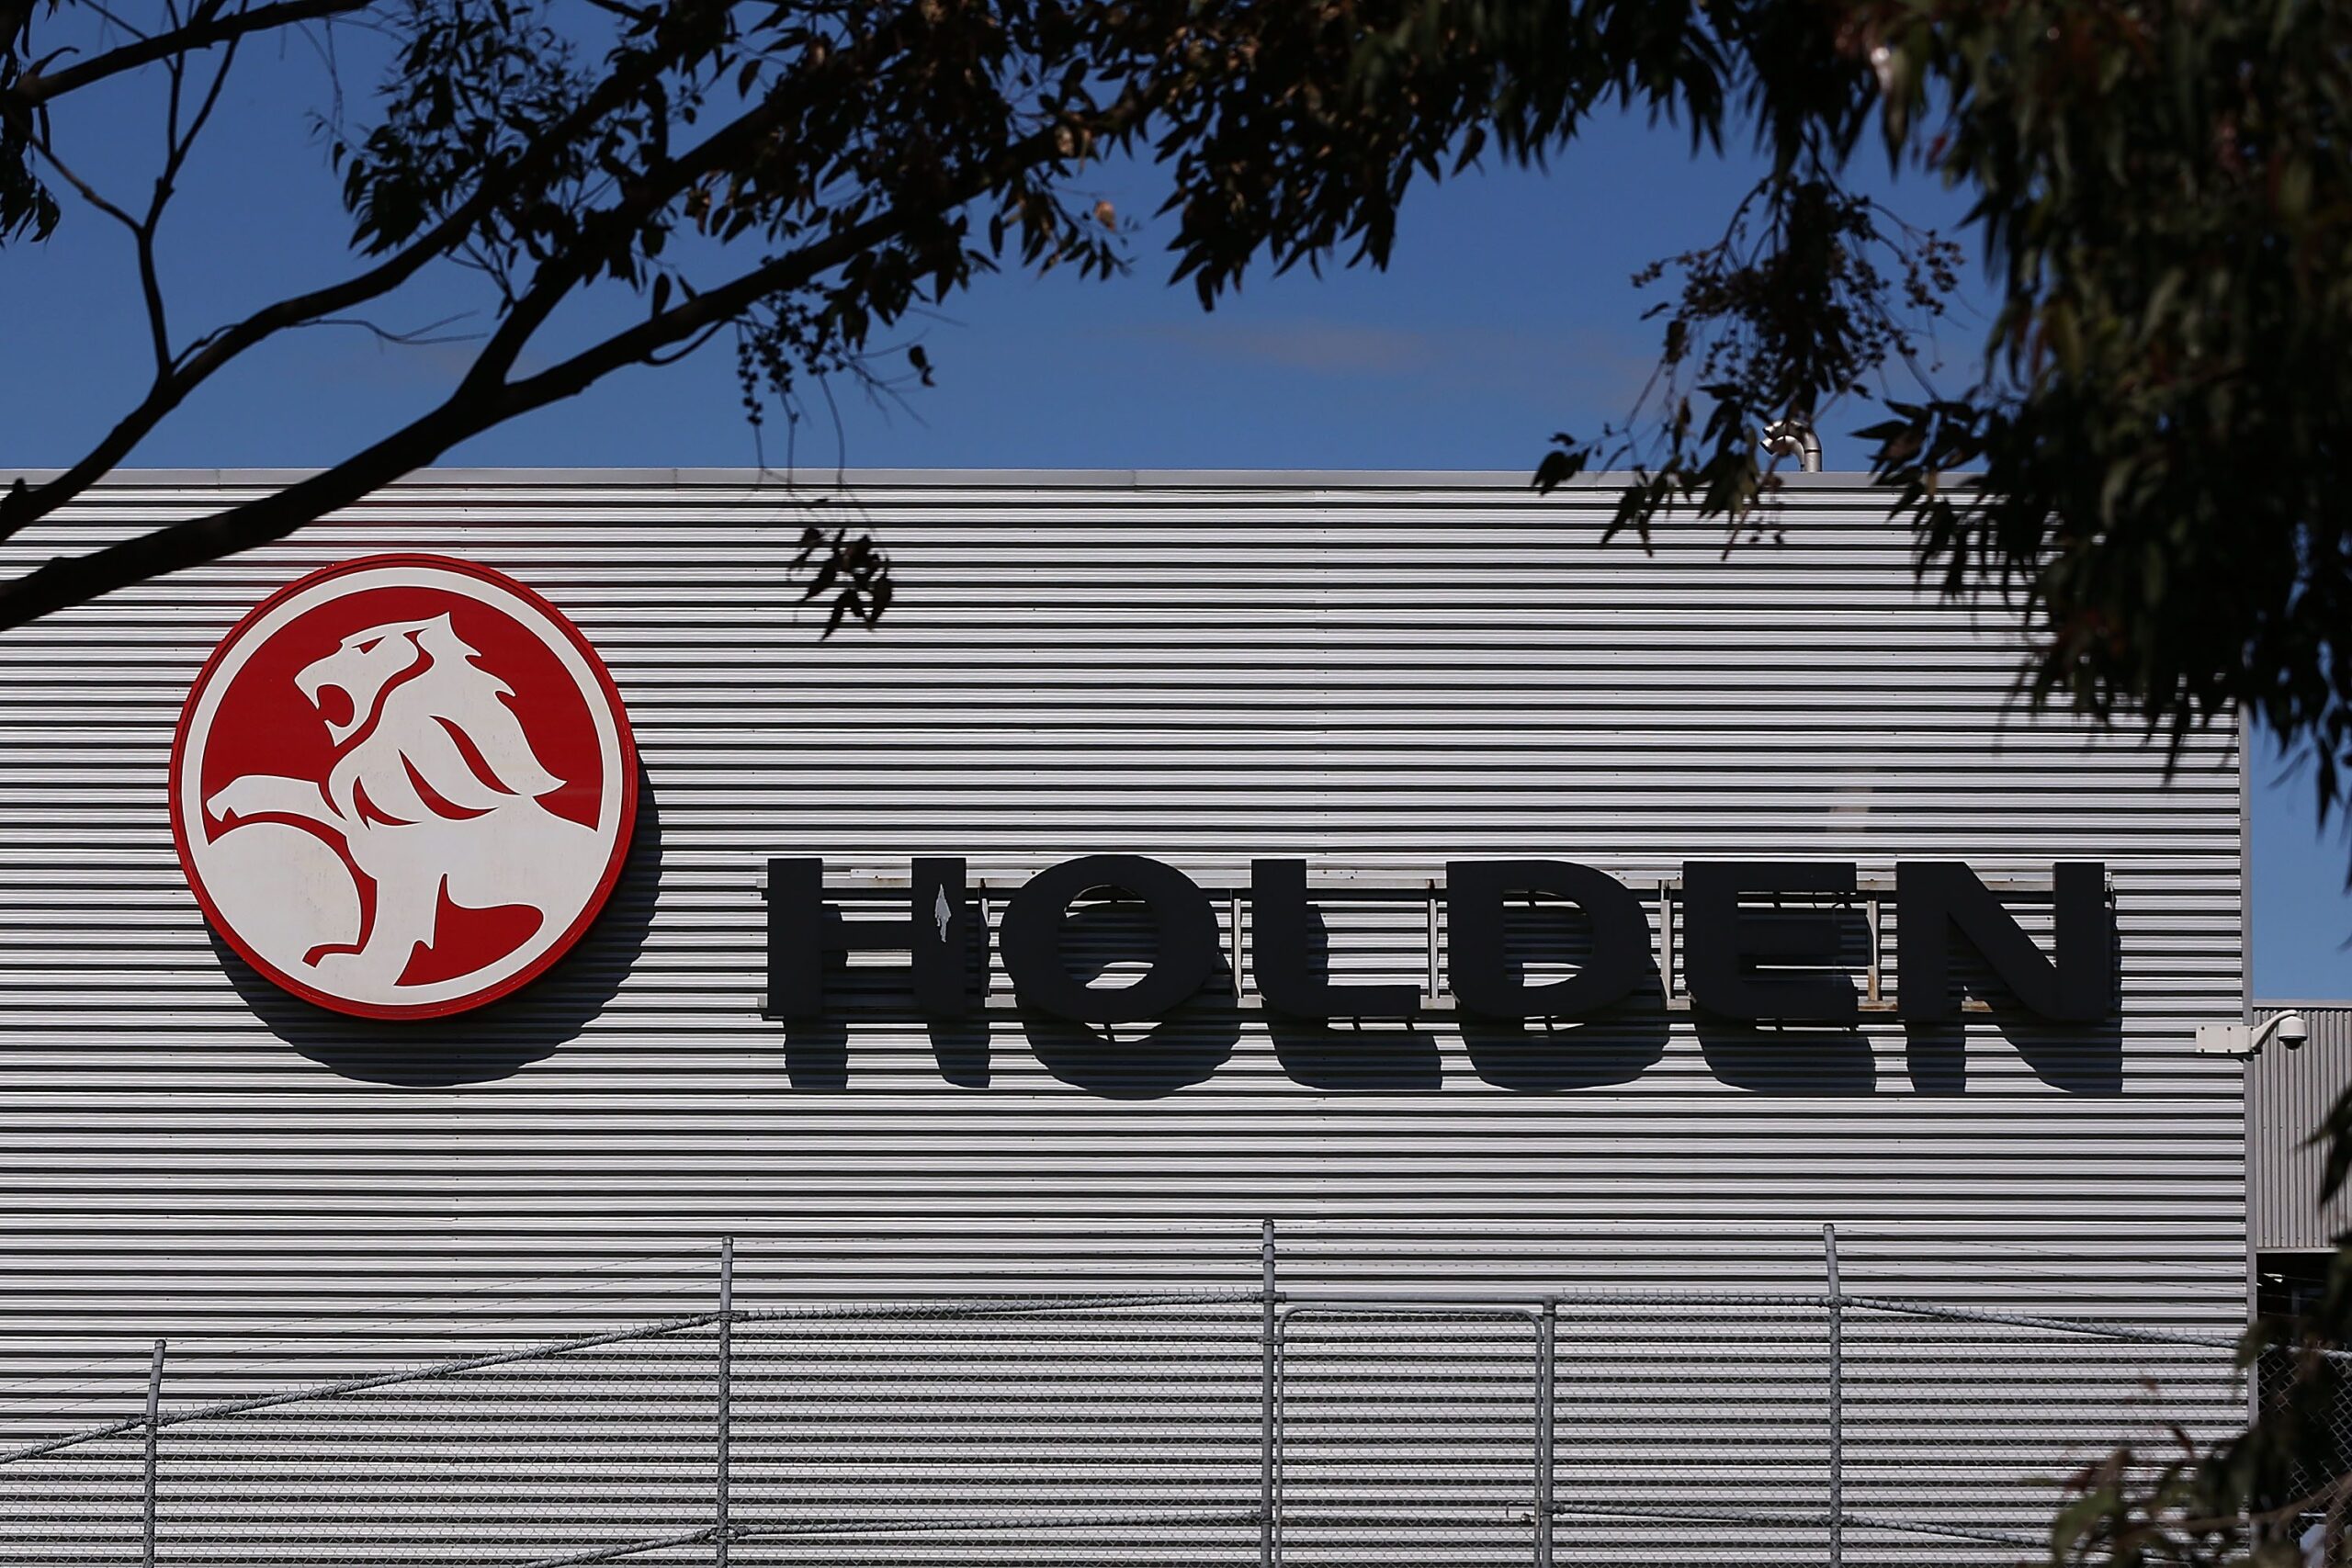 Holden Set To Shut Down Australian Operations